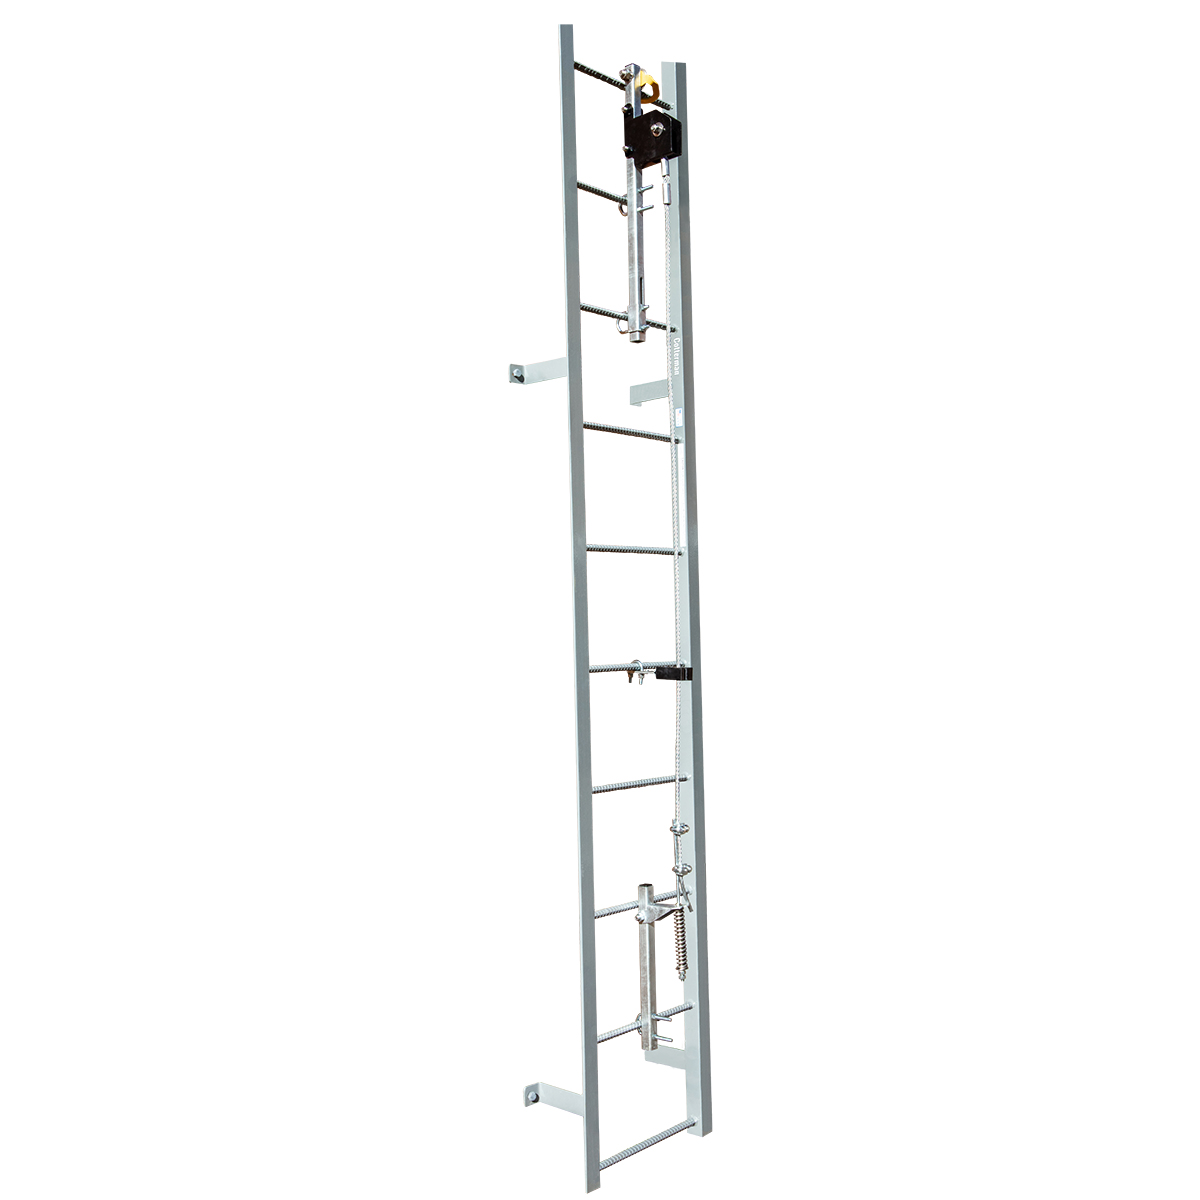 SafeWaze 100' VLL Cable Ladder System, 2-person Complete Kit